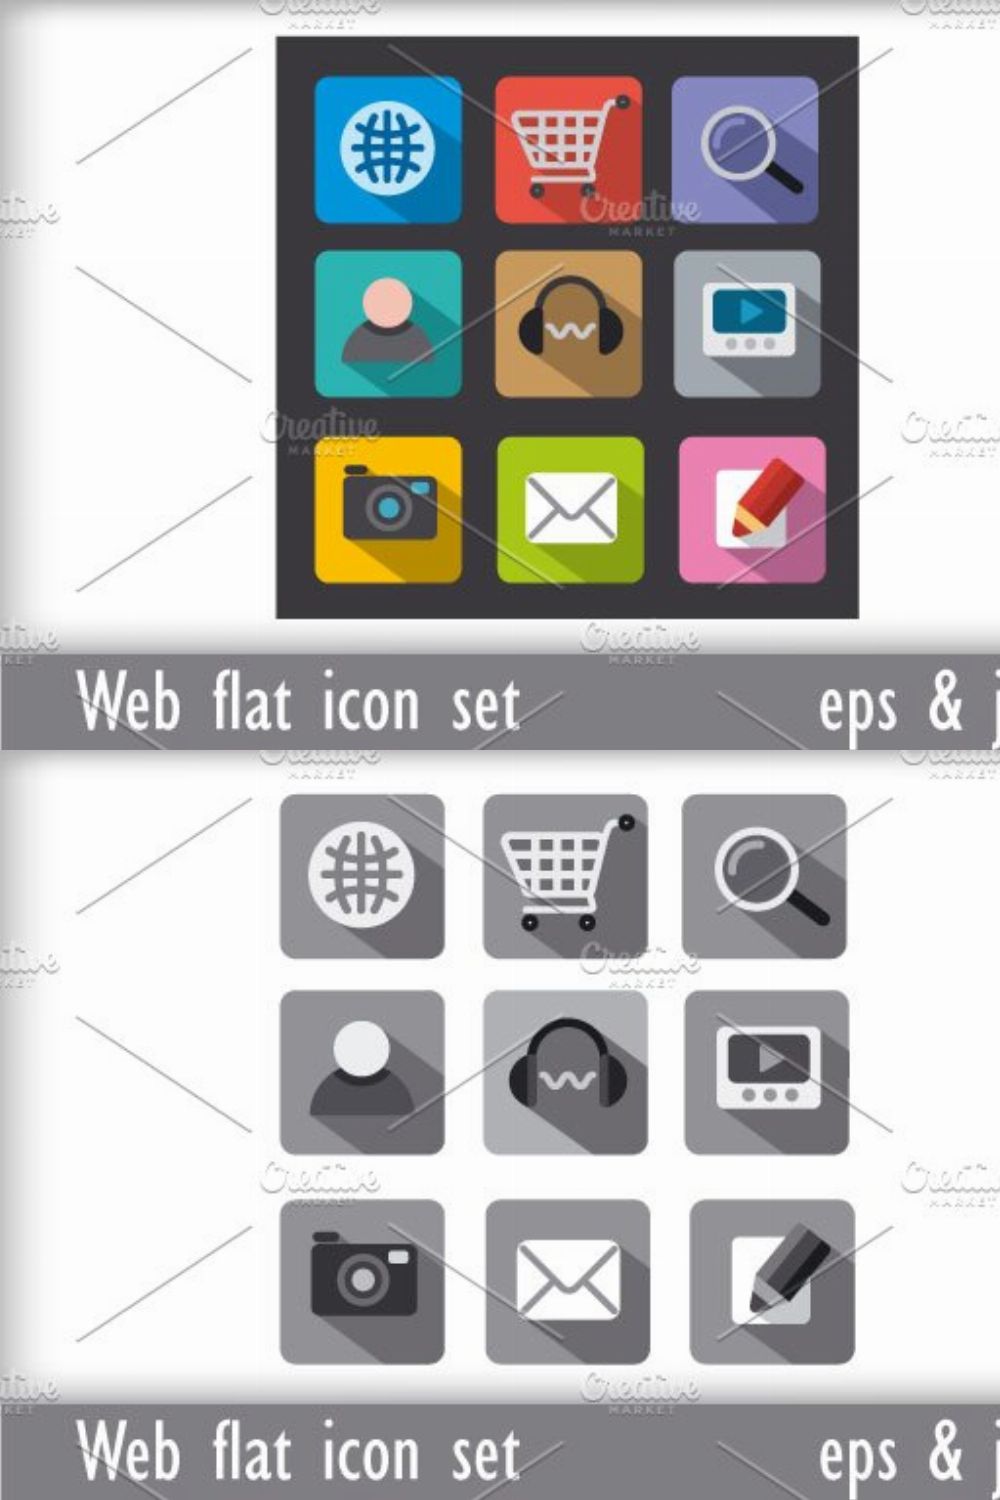 Web flat icon set pinterest preview image.